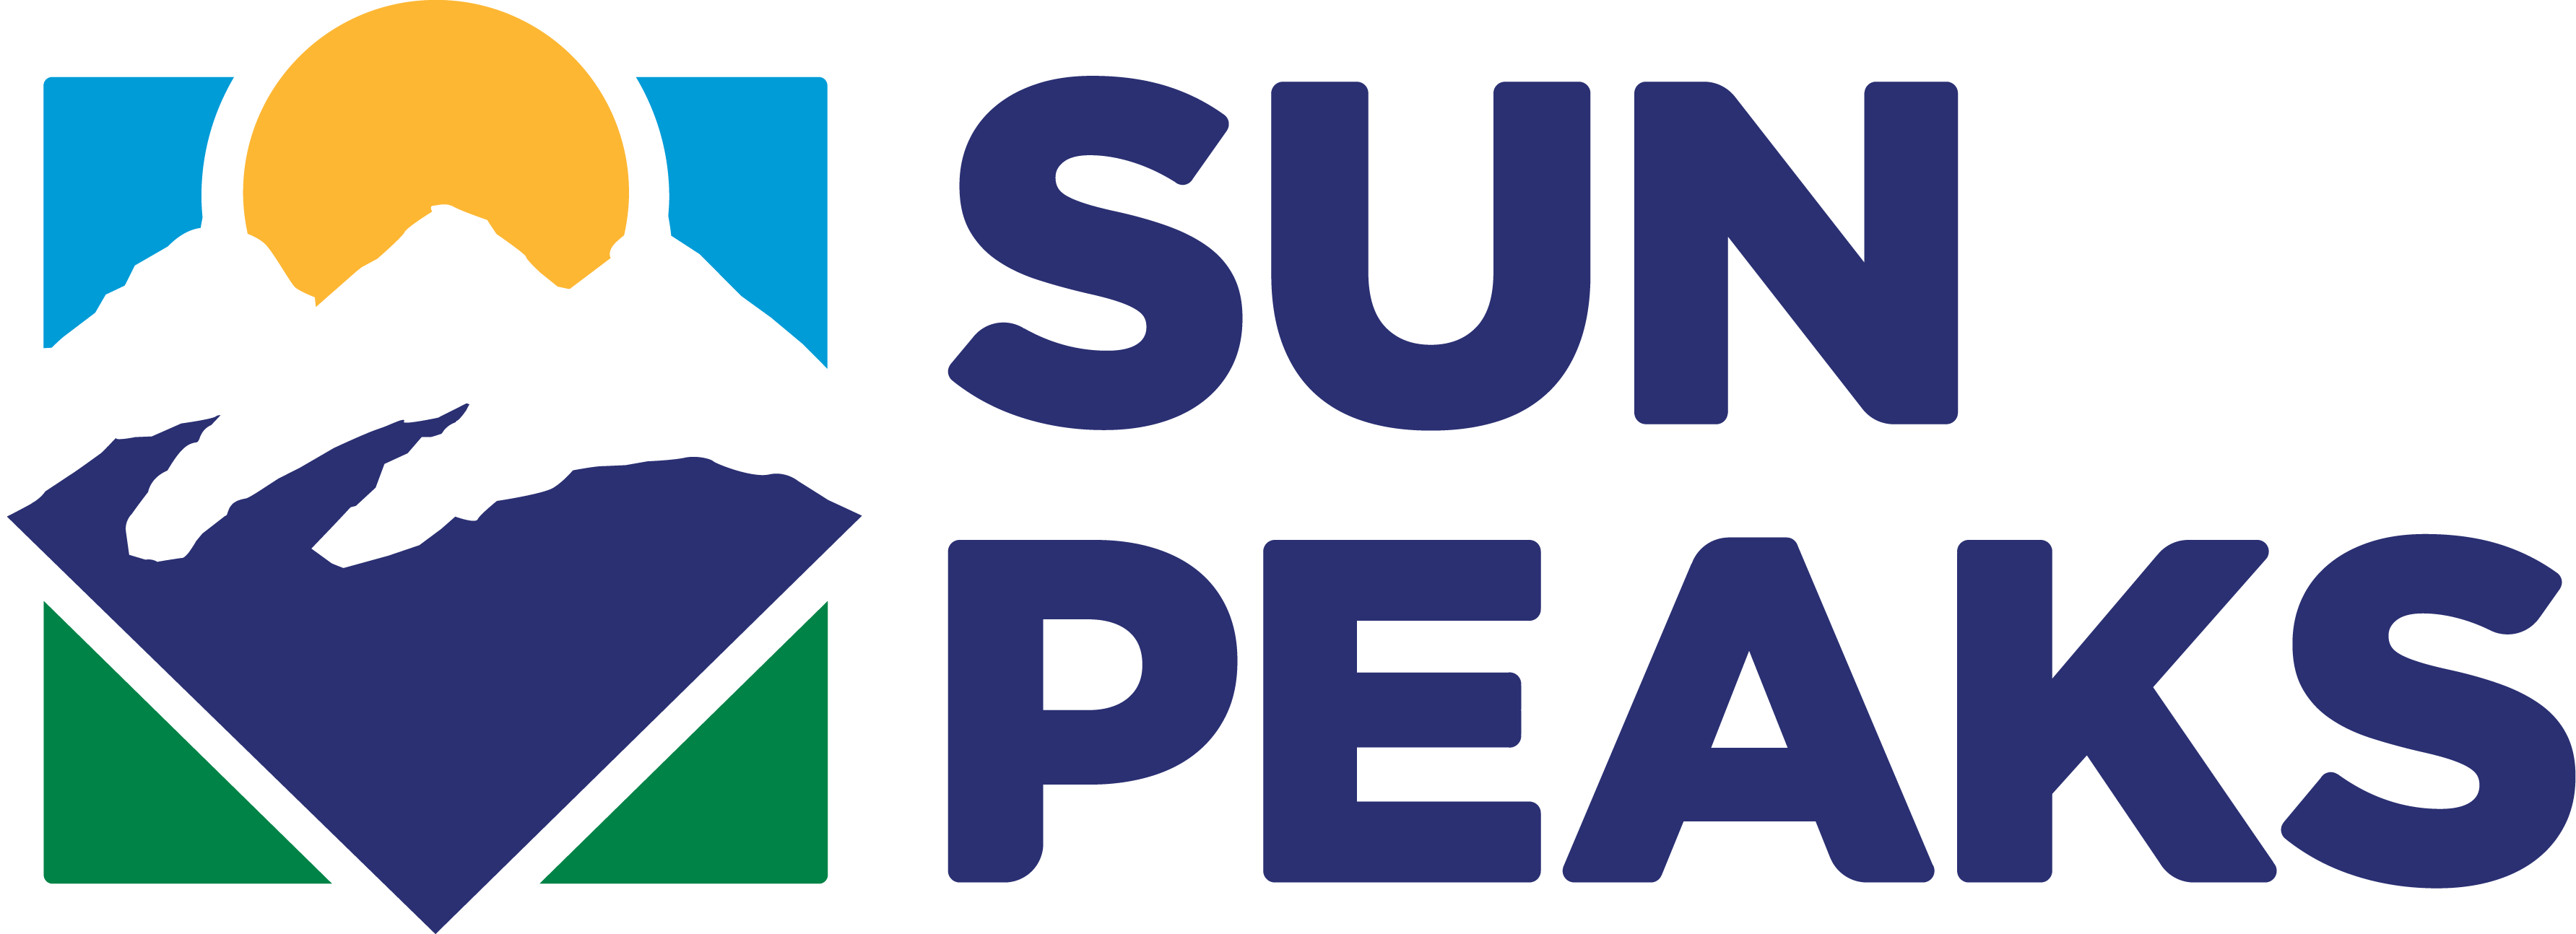 Resort logo